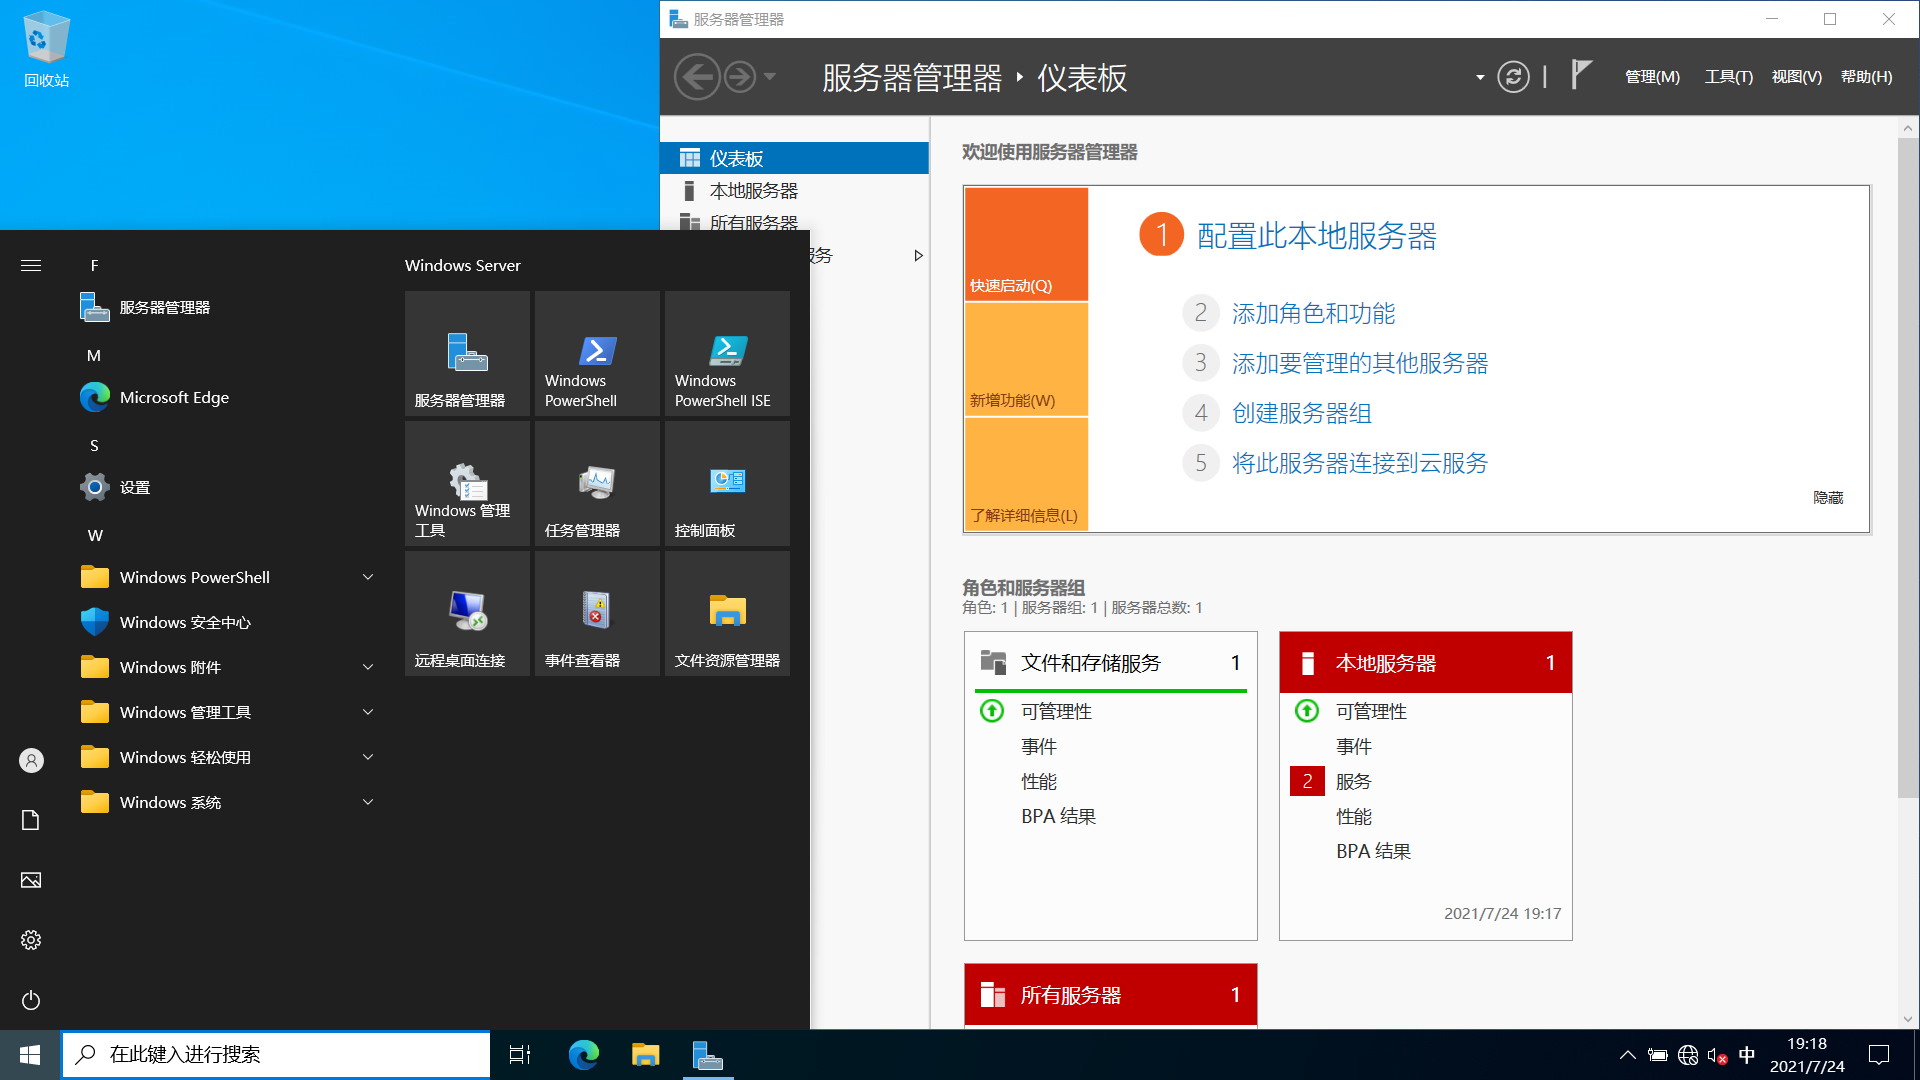 WindowsServer2022LTSCBuild20348.1简体中文版-程序员阿鑫-带你一起秃头！-第2张图片